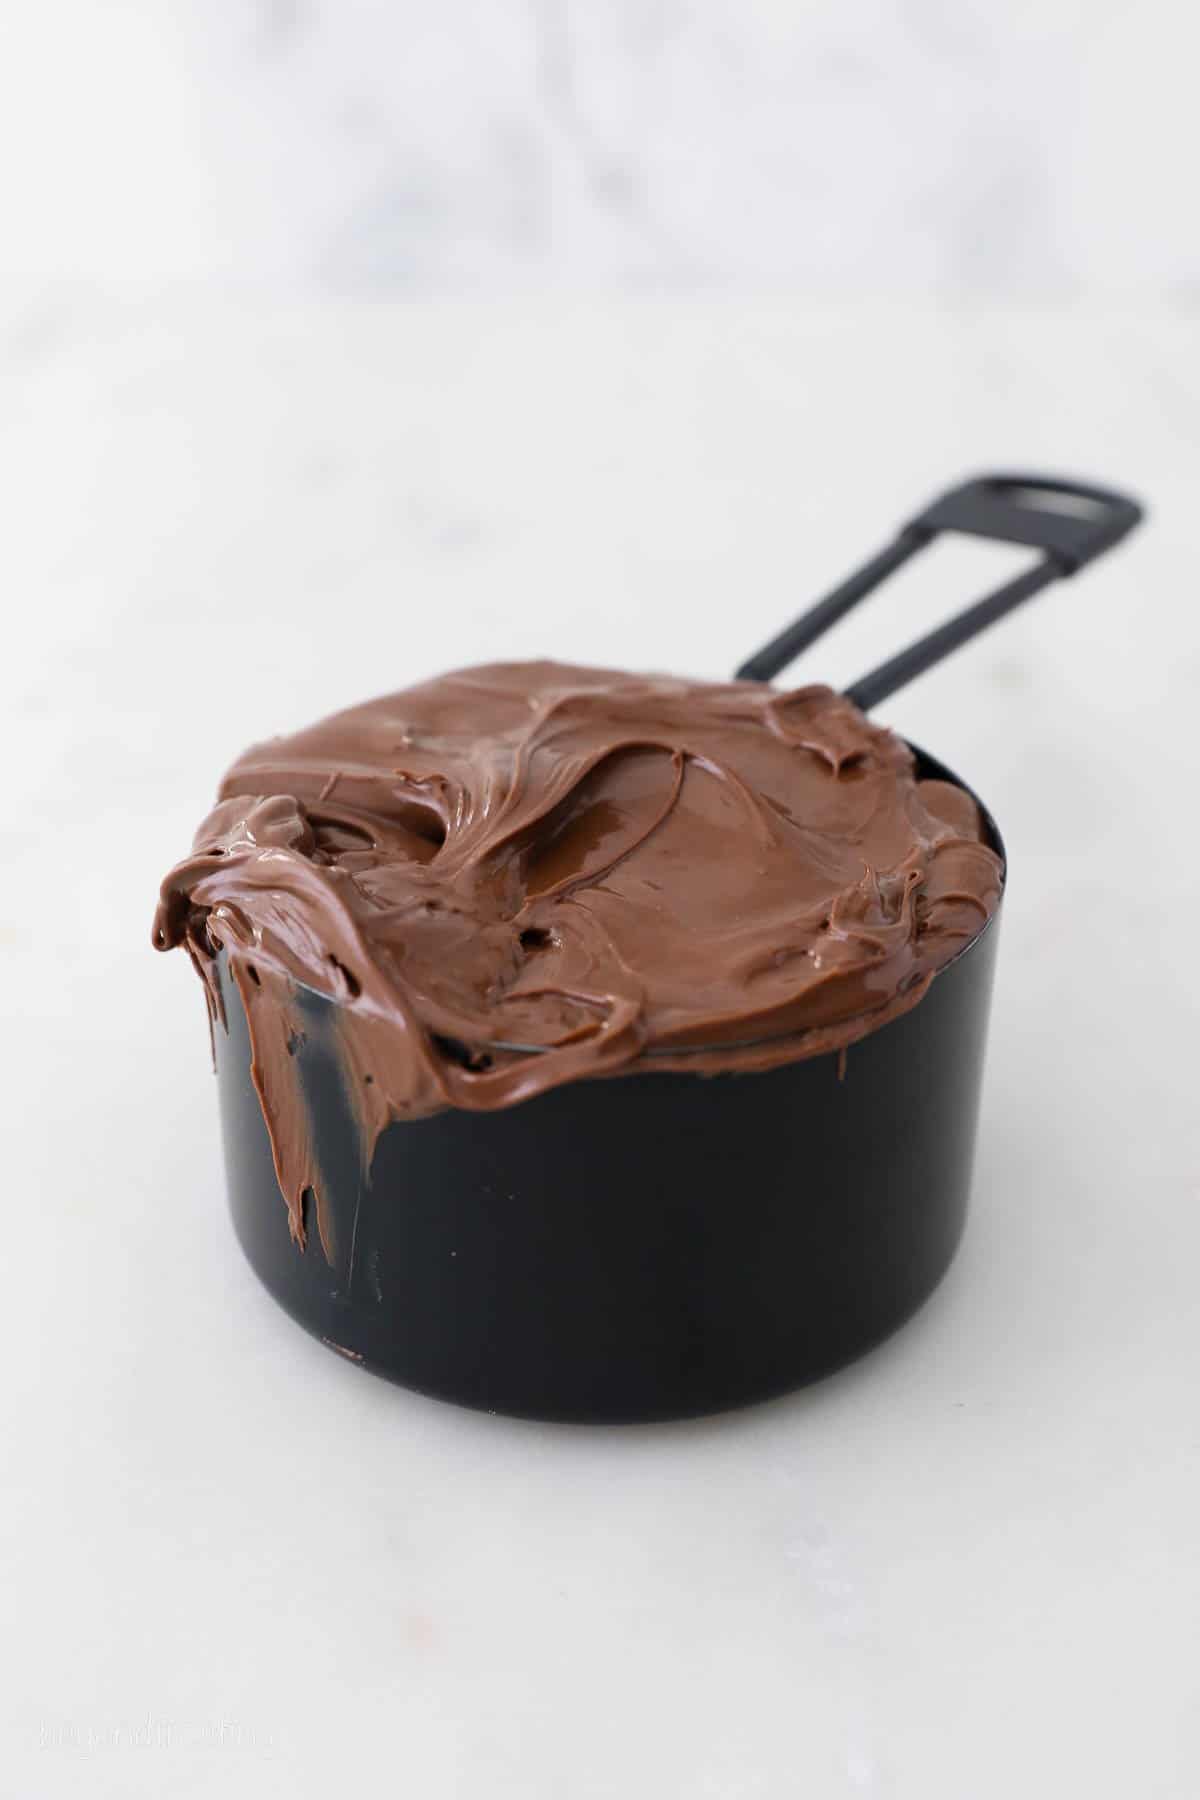 Nutella in a black measuring cup.